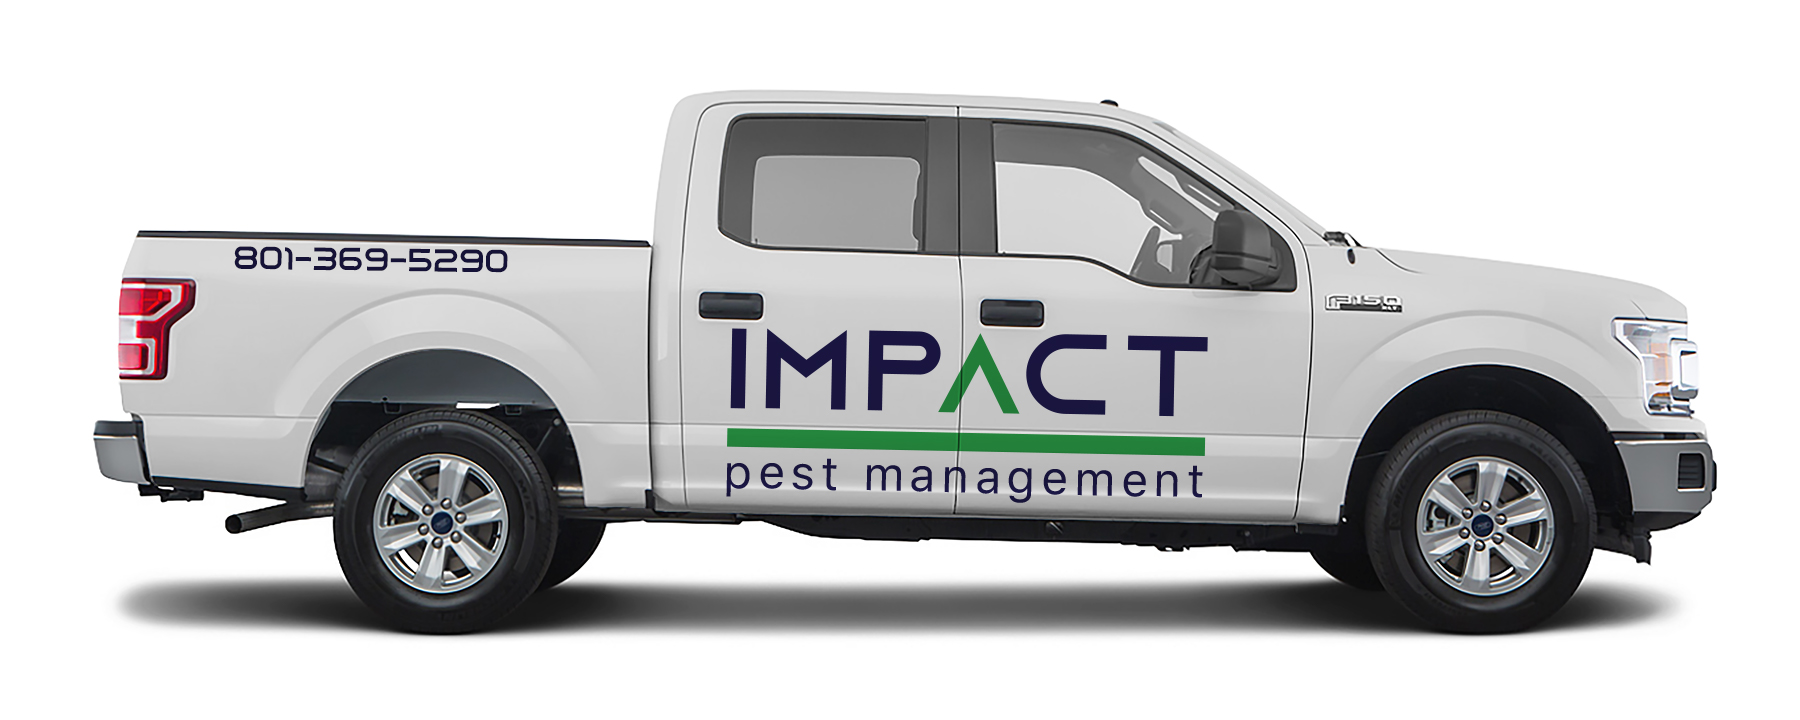 Impact Pest Management Ford F-150 Passenger